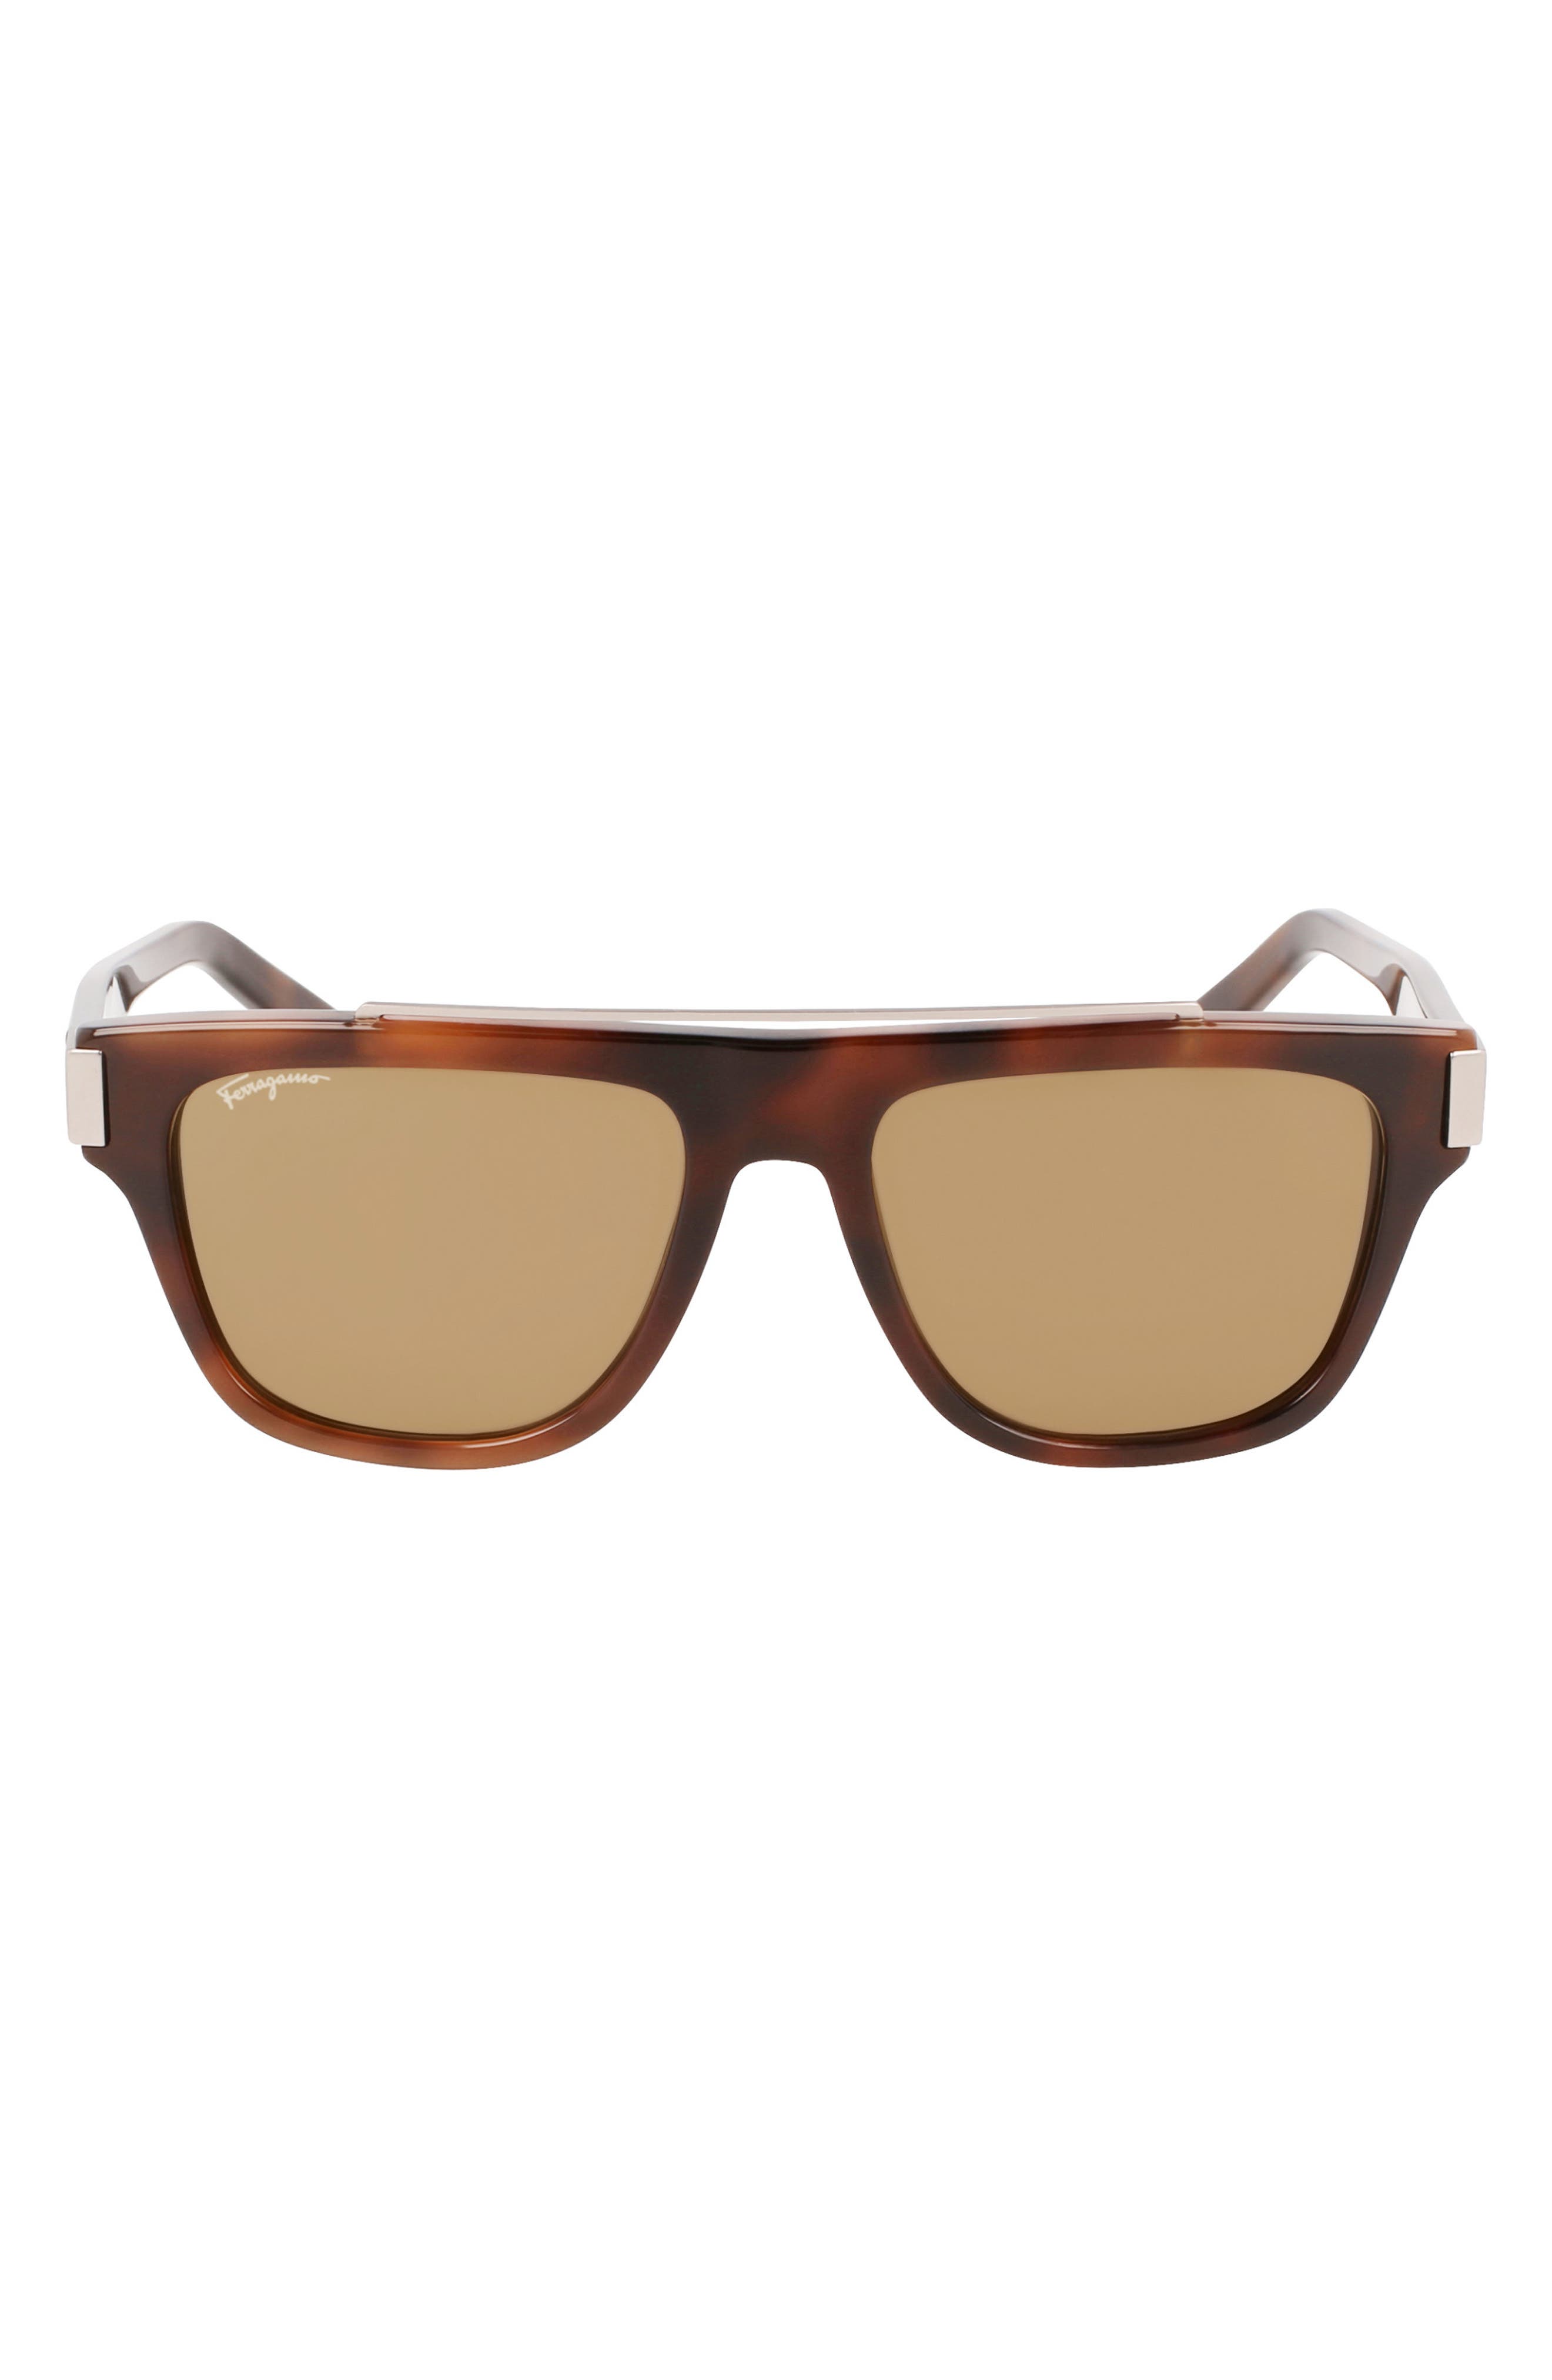 Salvatore Ferragamo Gancini 54mm Rectangular Sunglasses in Brown Tortoise at Nordstrom